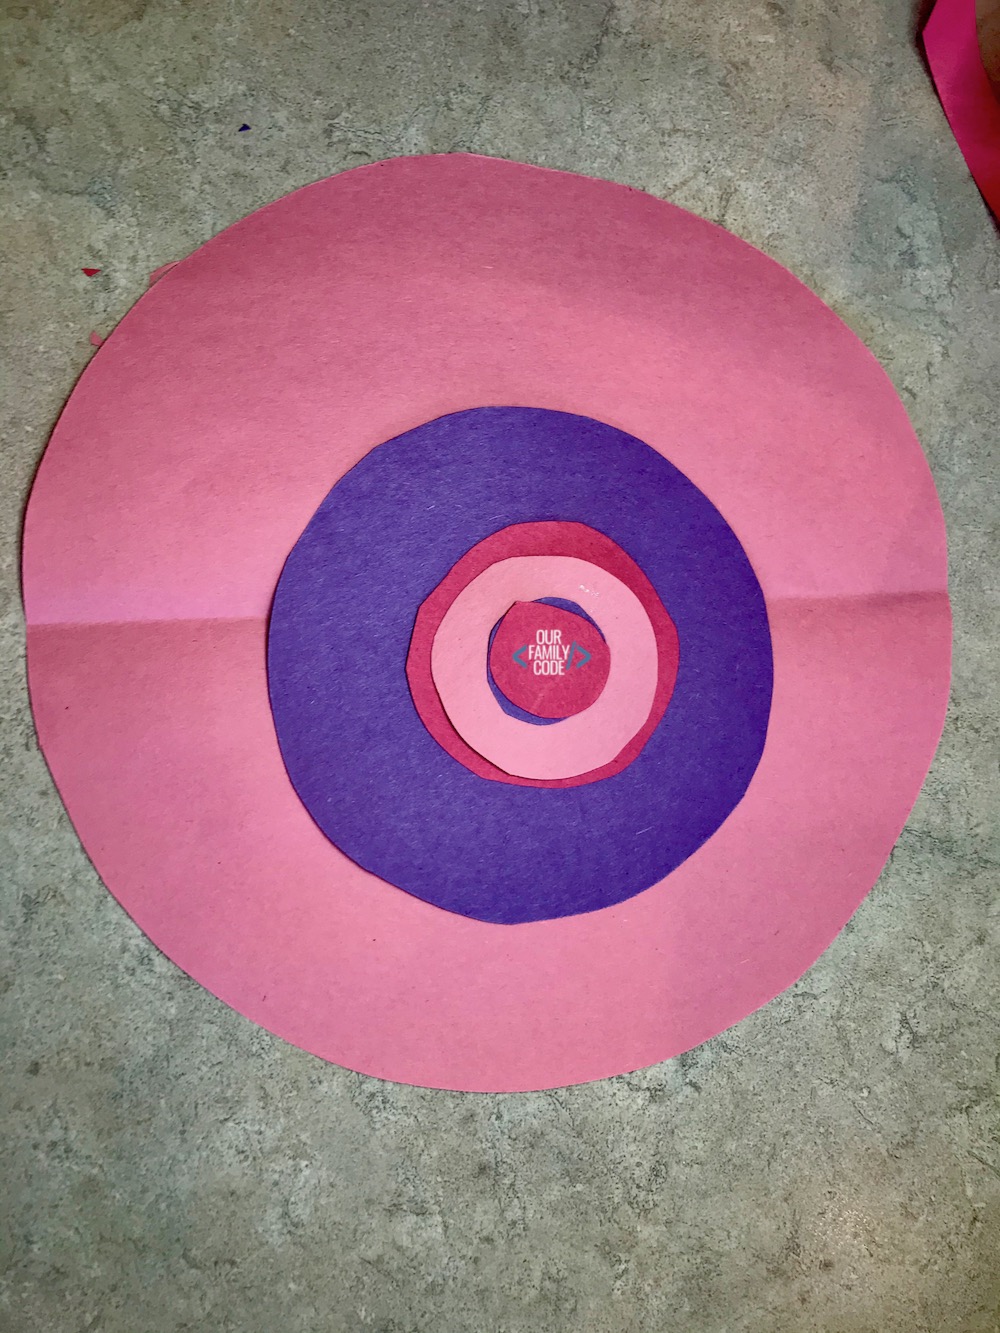 A picture of a pink Fibonacci flower from Fibonacci activity for kids.